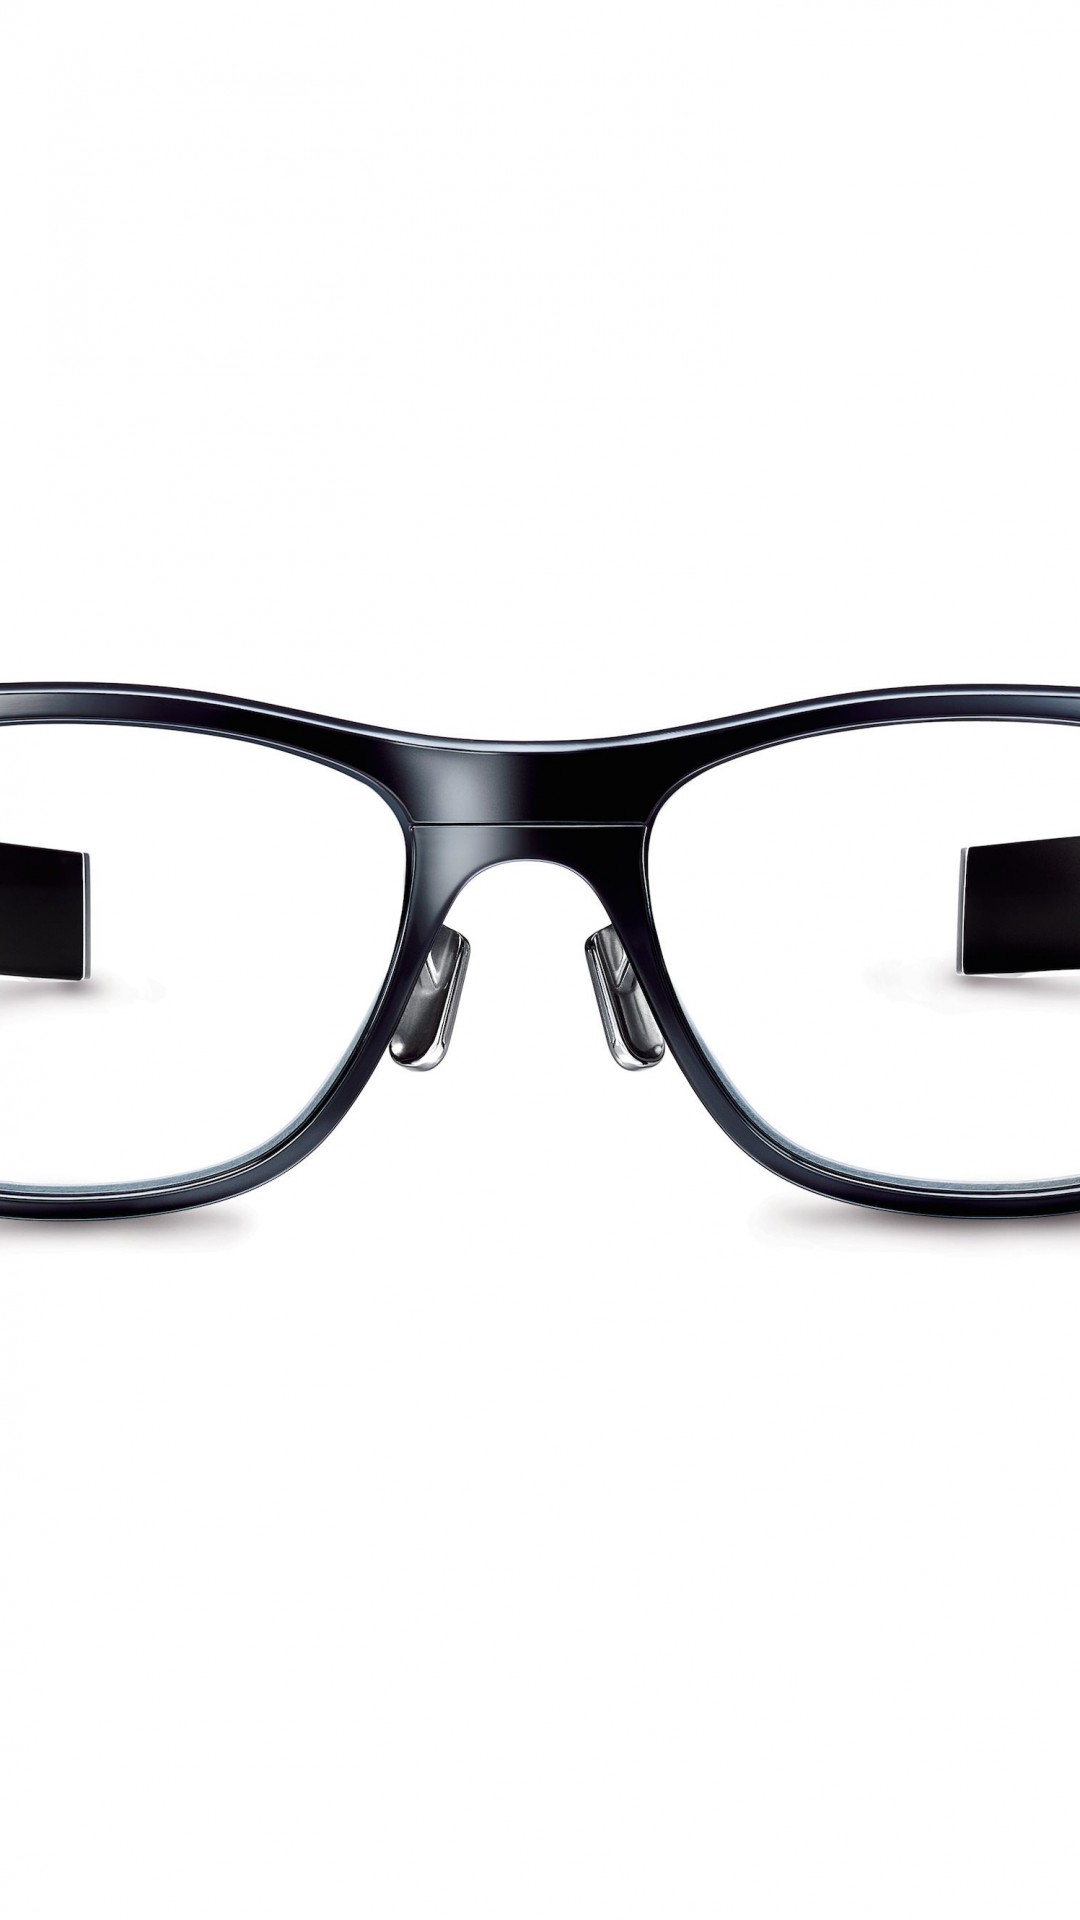 Jins Meme Smart Glasses Wallpaper for Google Nexus 5X